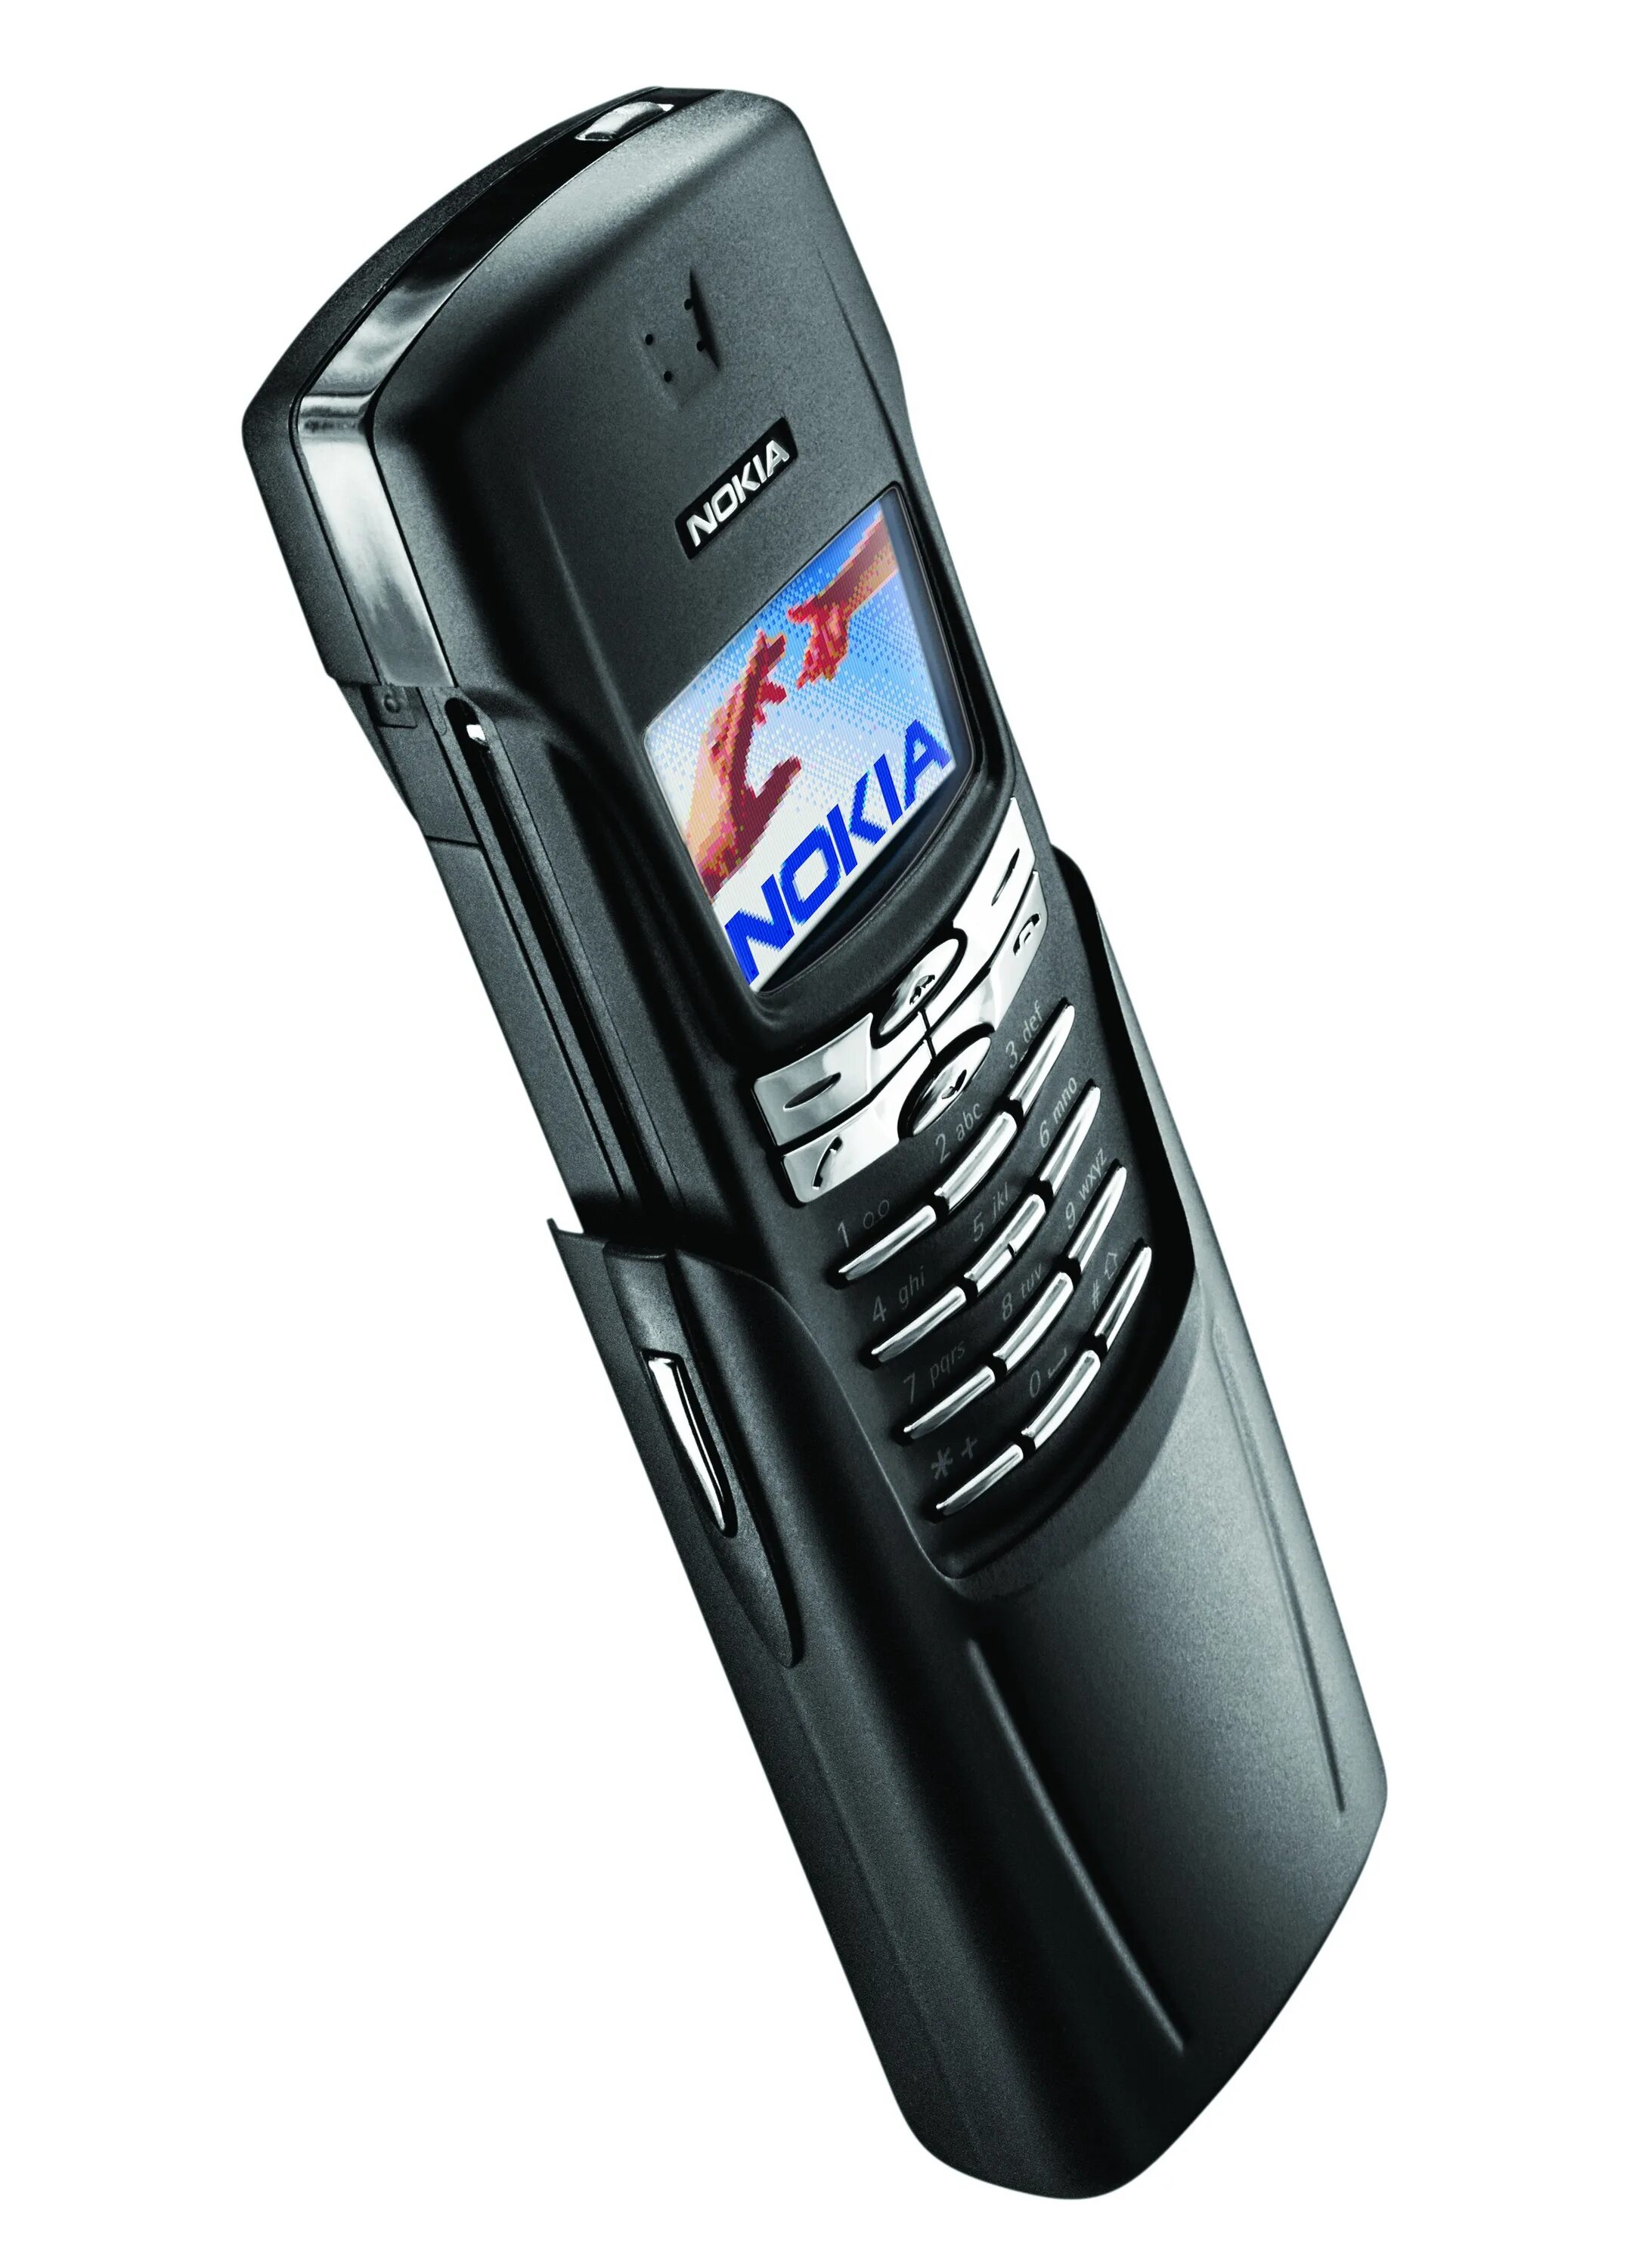 Nokia 8910i. Нокия Титан 8910. Нокиа в титановом корпусе 8910i. Nokia титановый корпус 8910i.